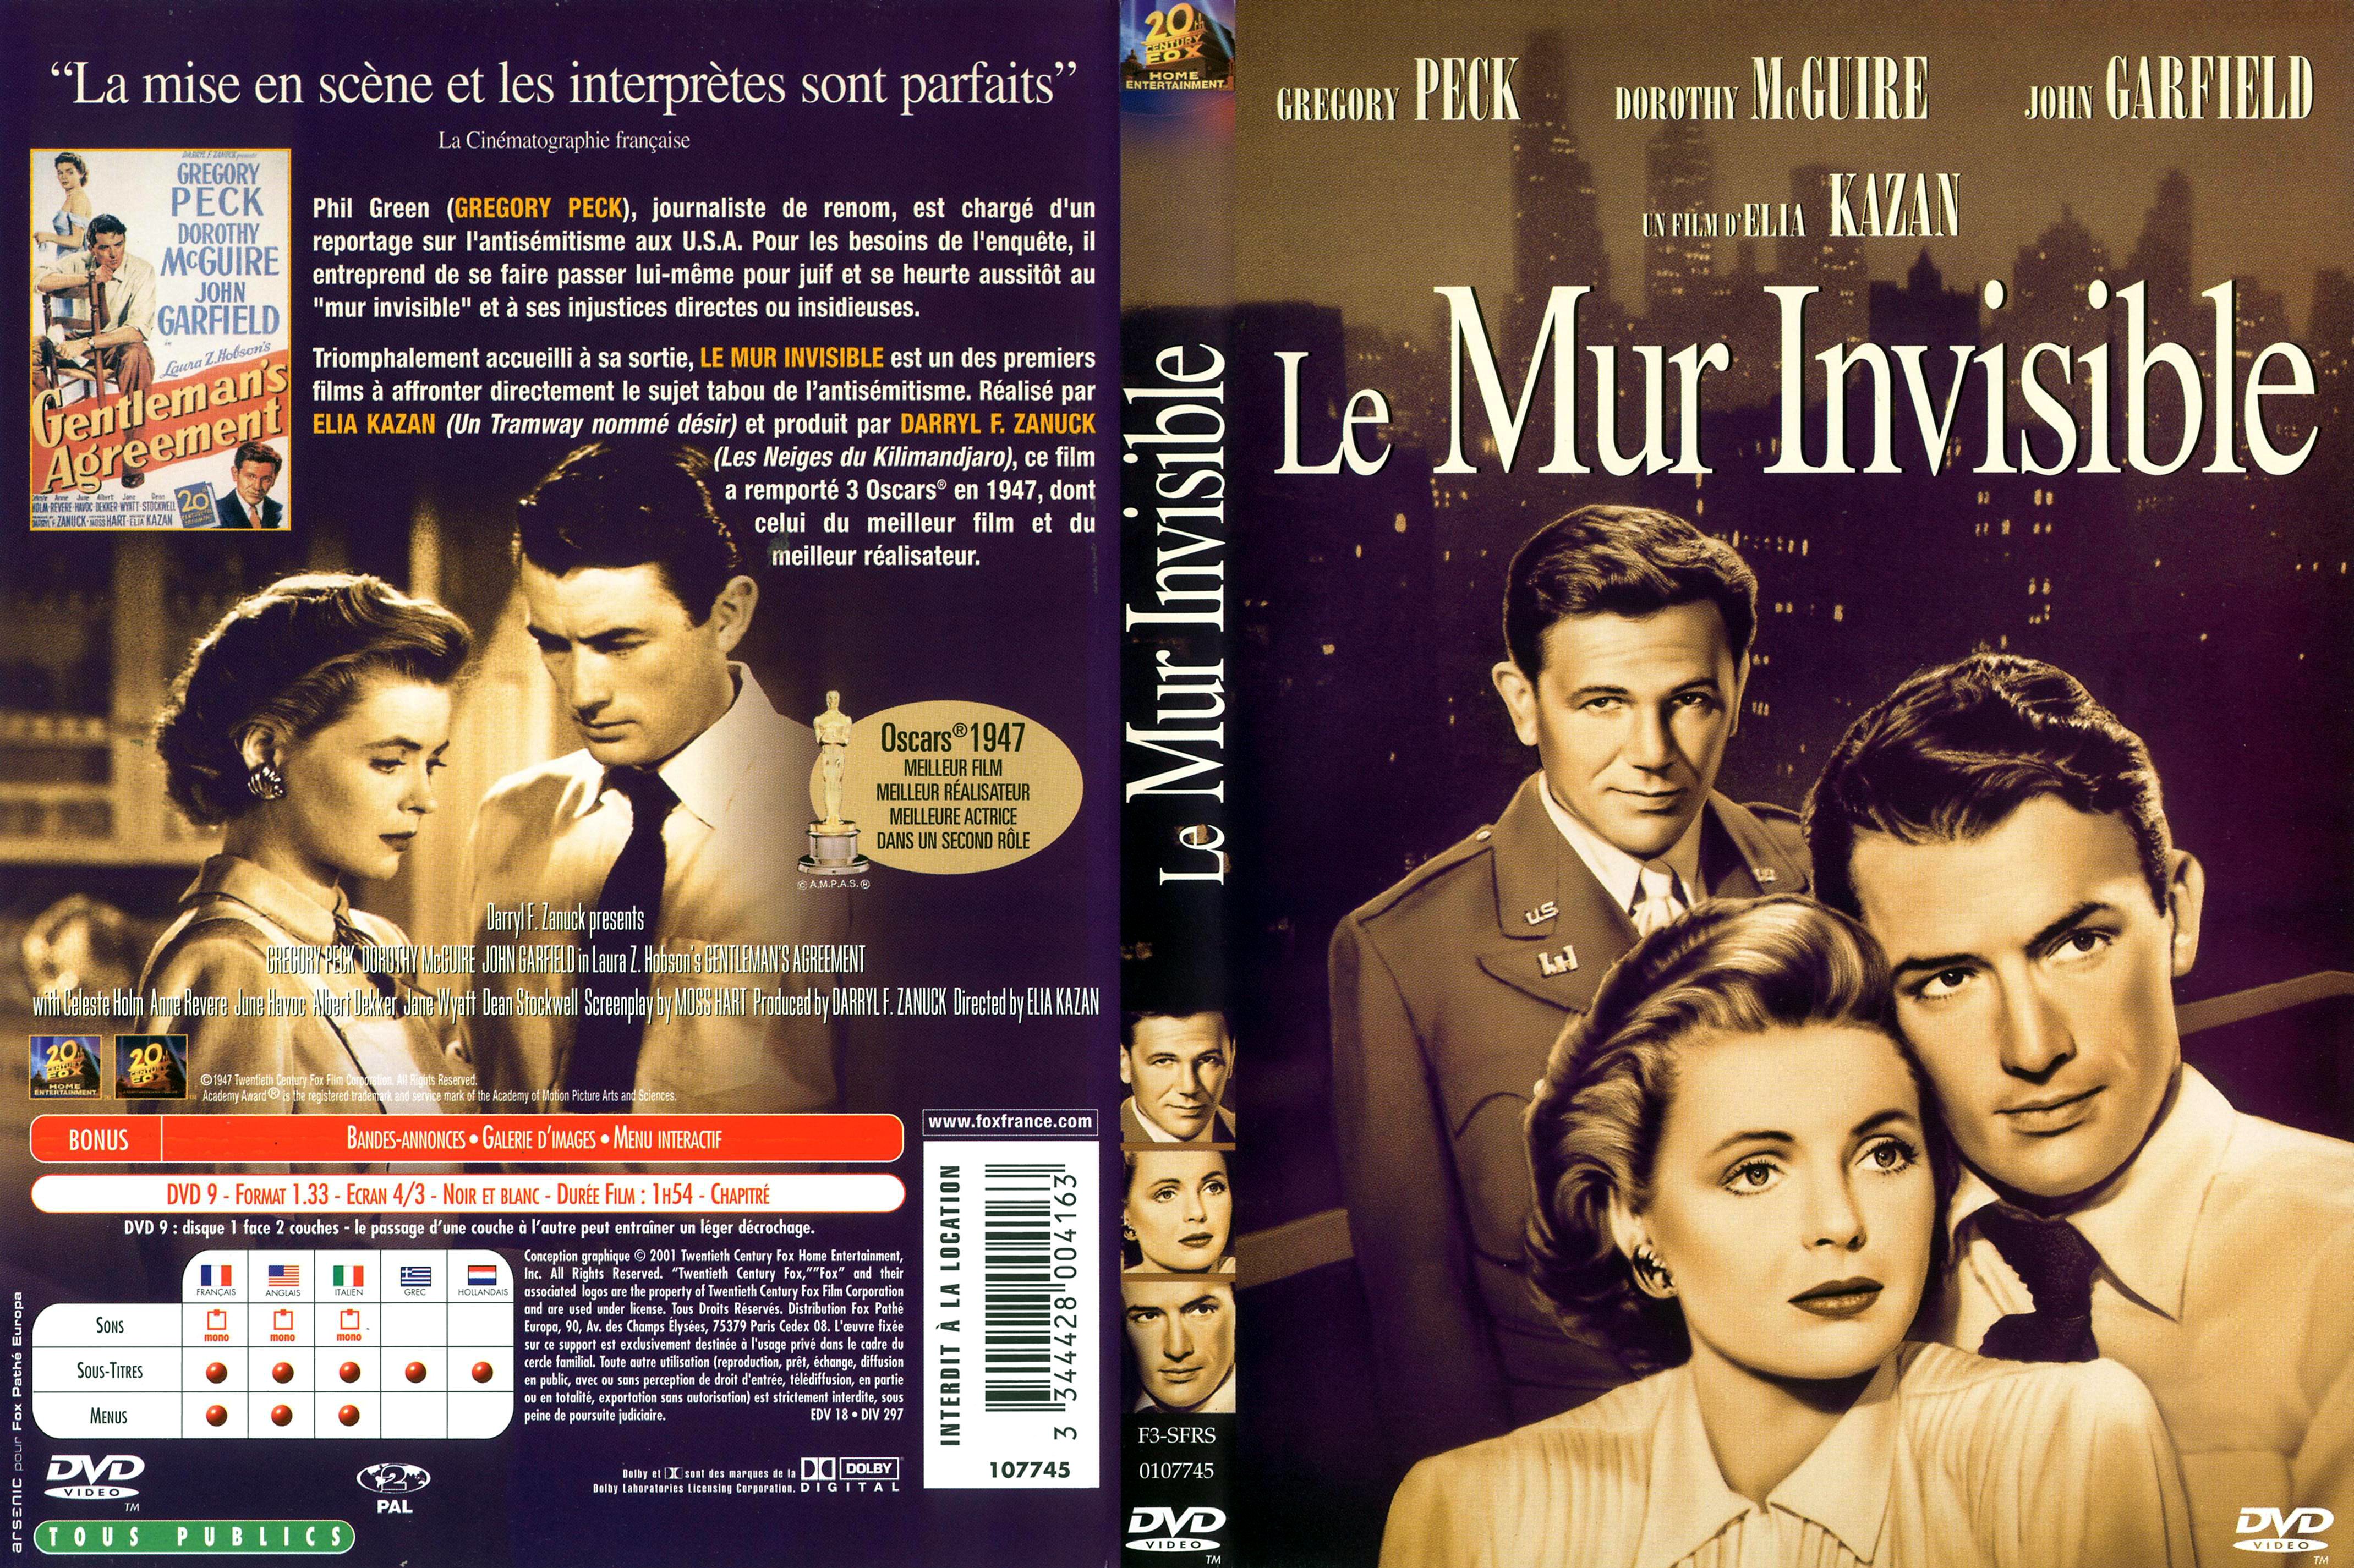 Jaquette DVD Le mur invisible v2